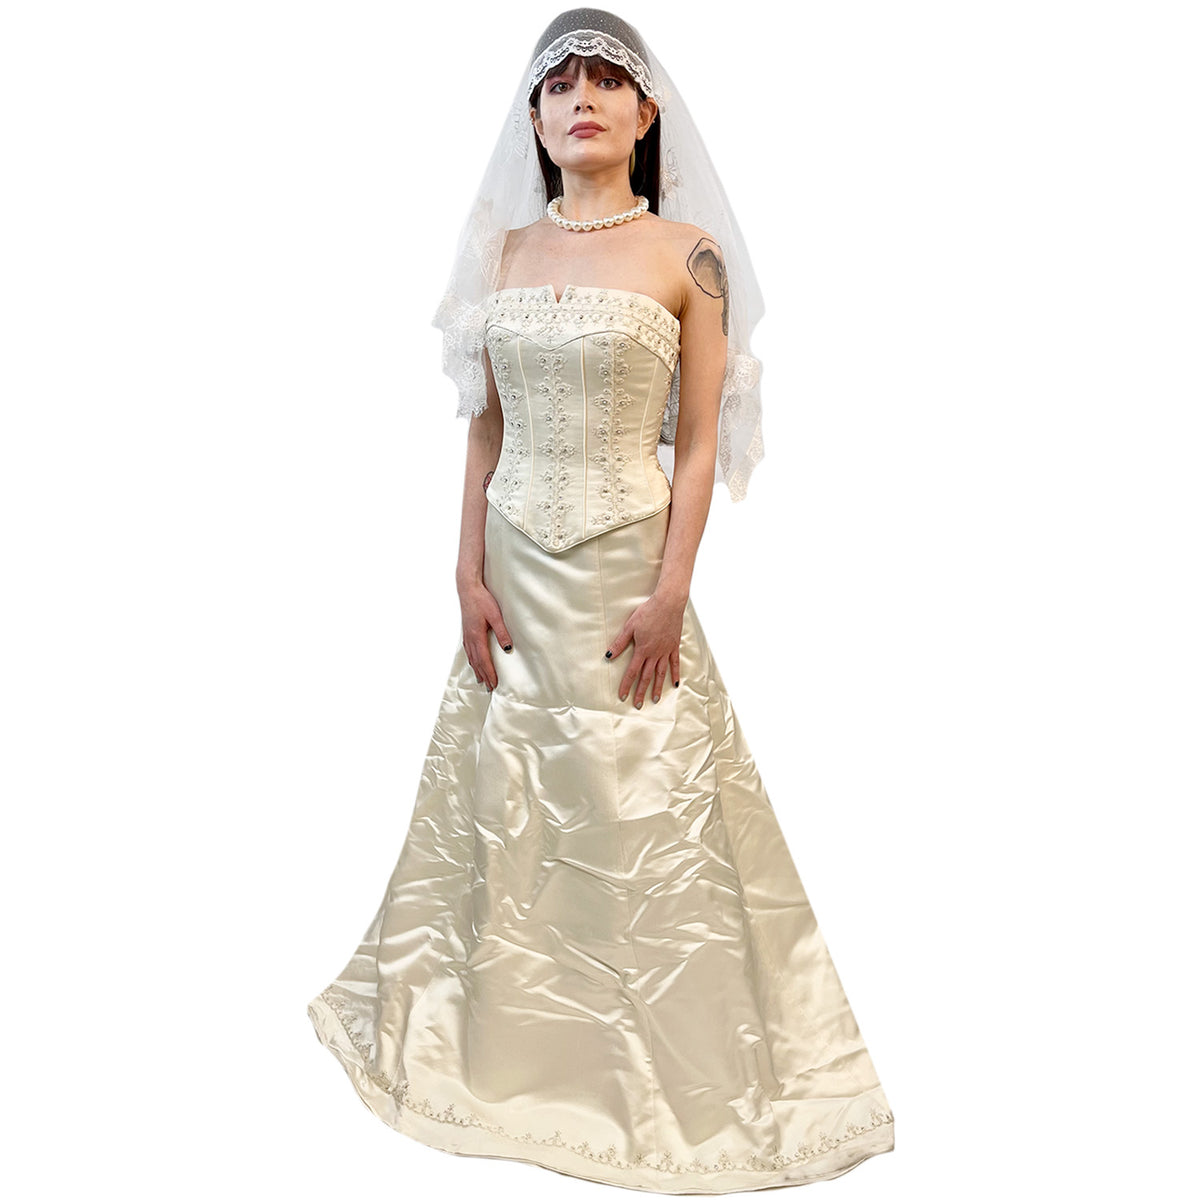 Vintage Corset Sleeveless Wedding Dress Adult Costume